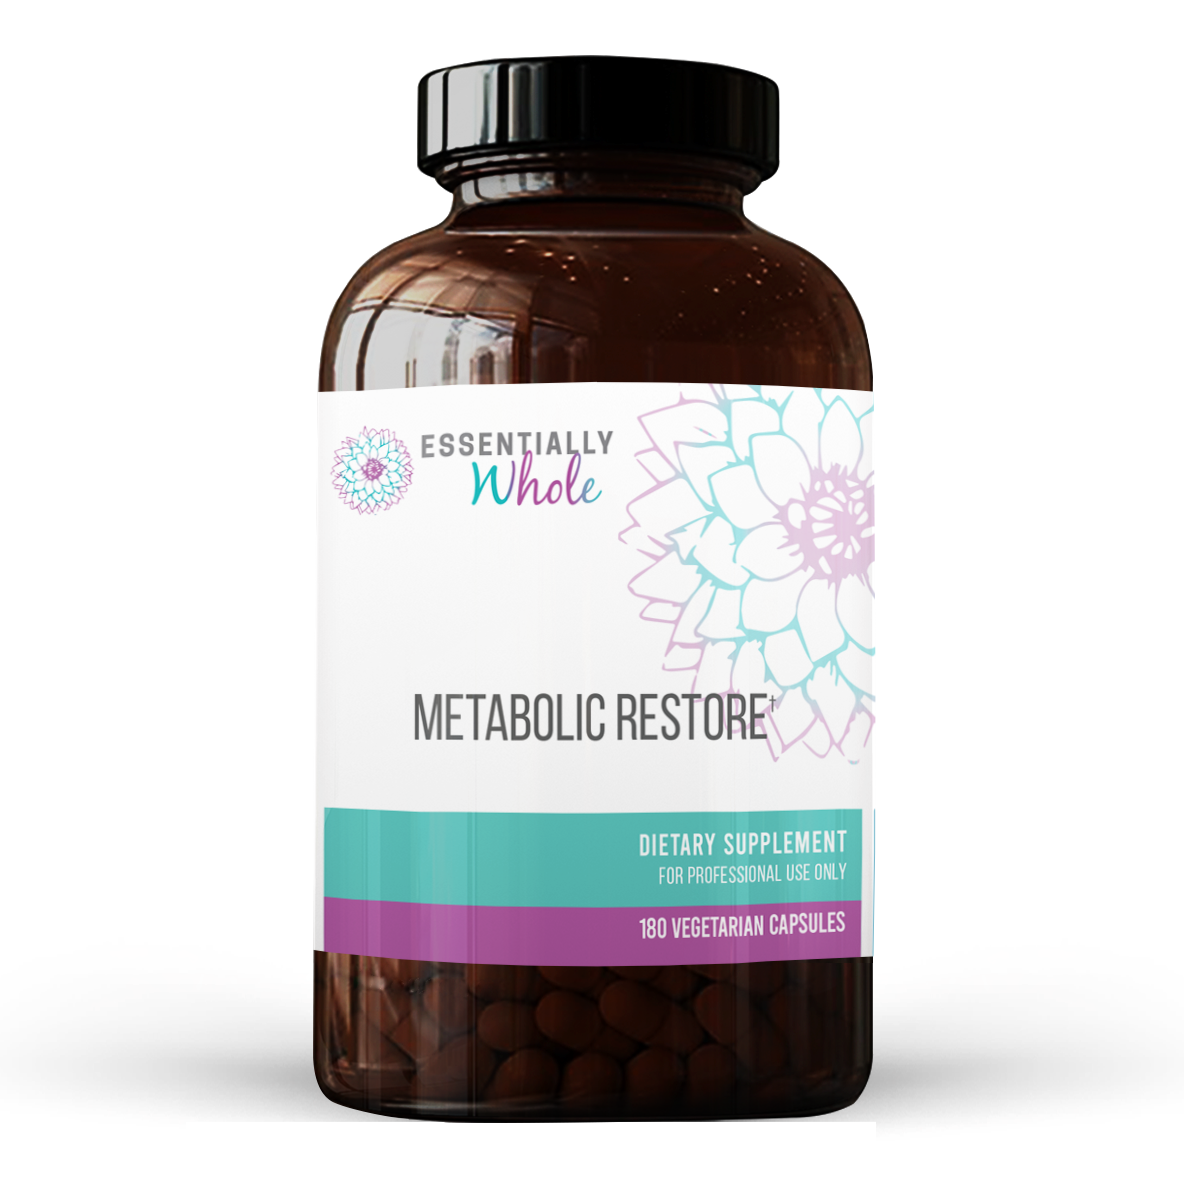 WIDGET TEST Metabolic Restore (NOT LIVE)